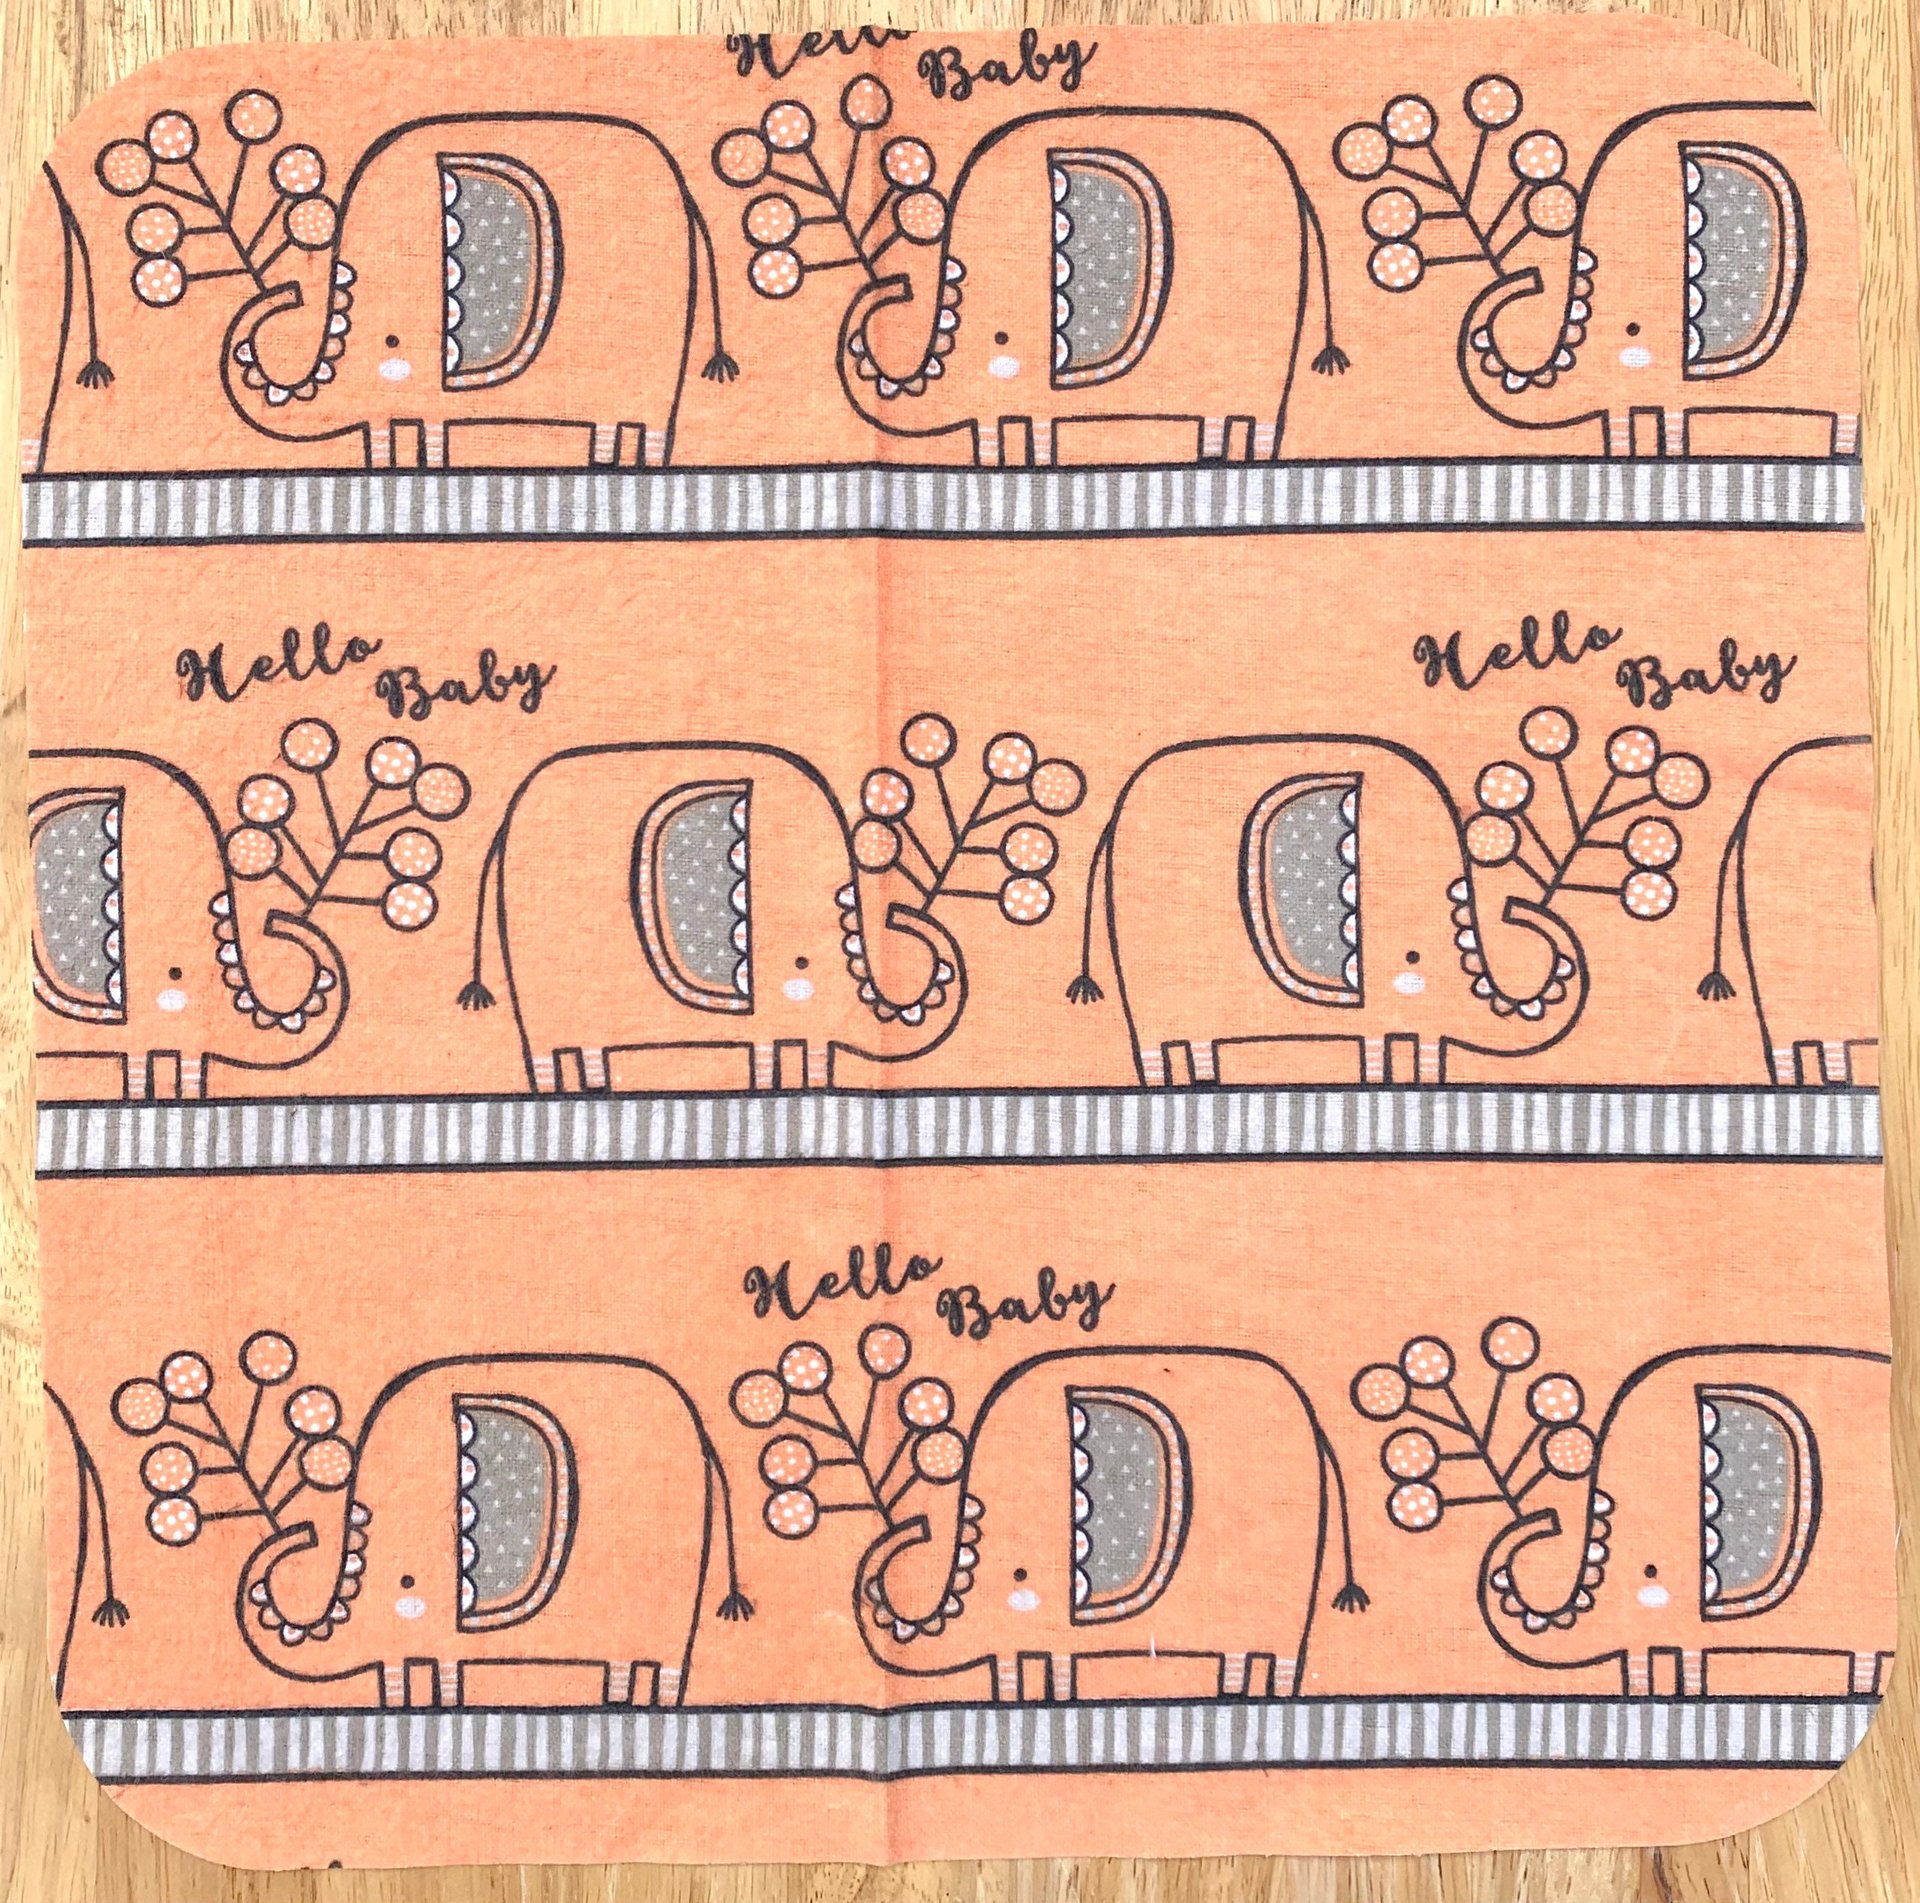 Beatrix Elephant (Series 4) Paperless Towels || Unpaper Towels || Eco Sustainable